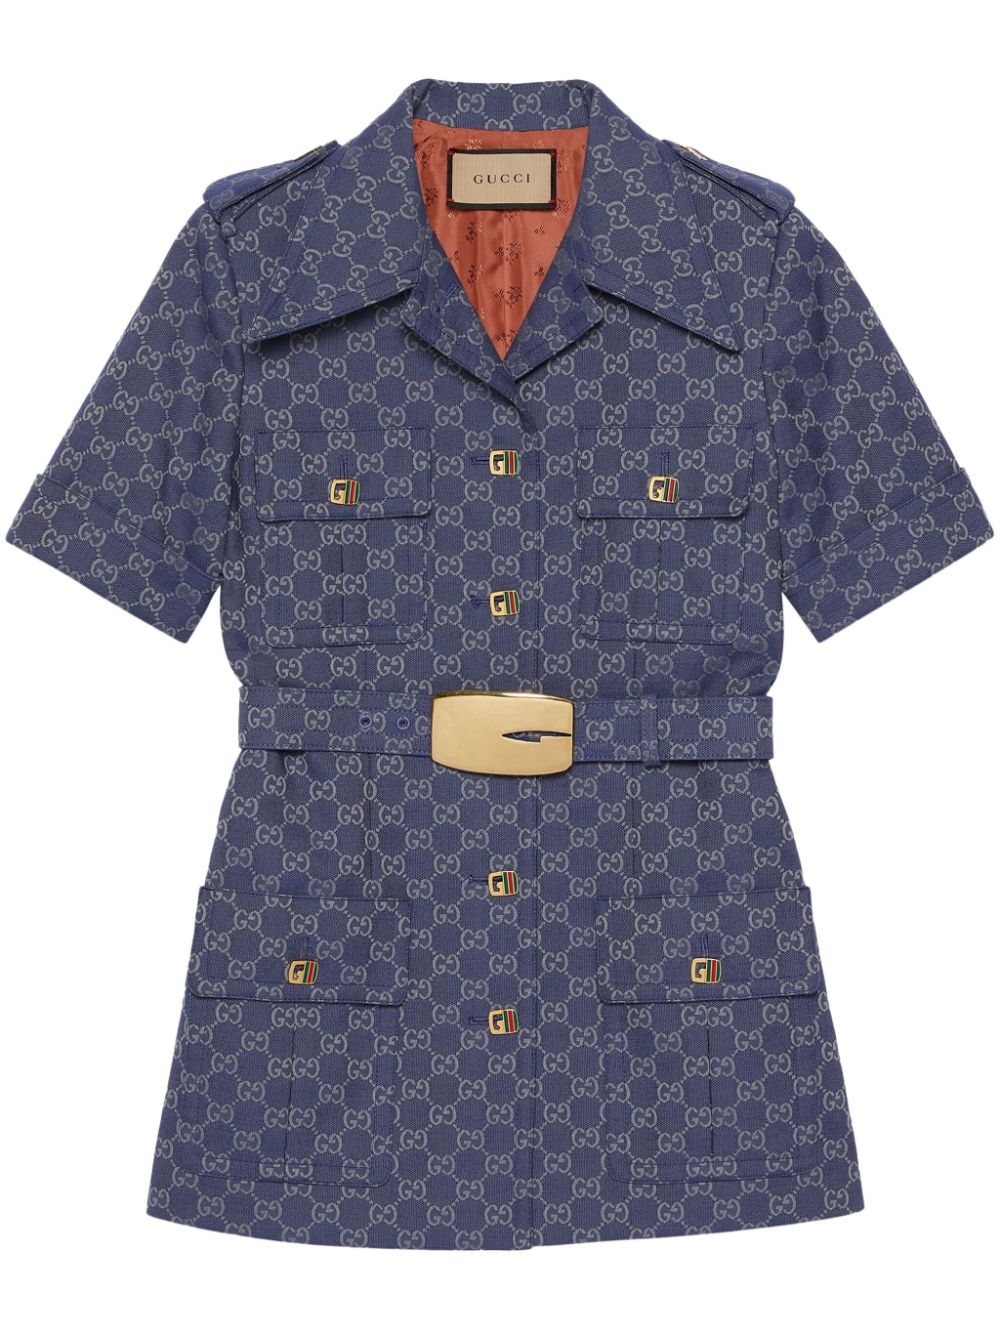 GUCCI Navy Blue Double G Short-Sleeve Shirt for Women - FW23